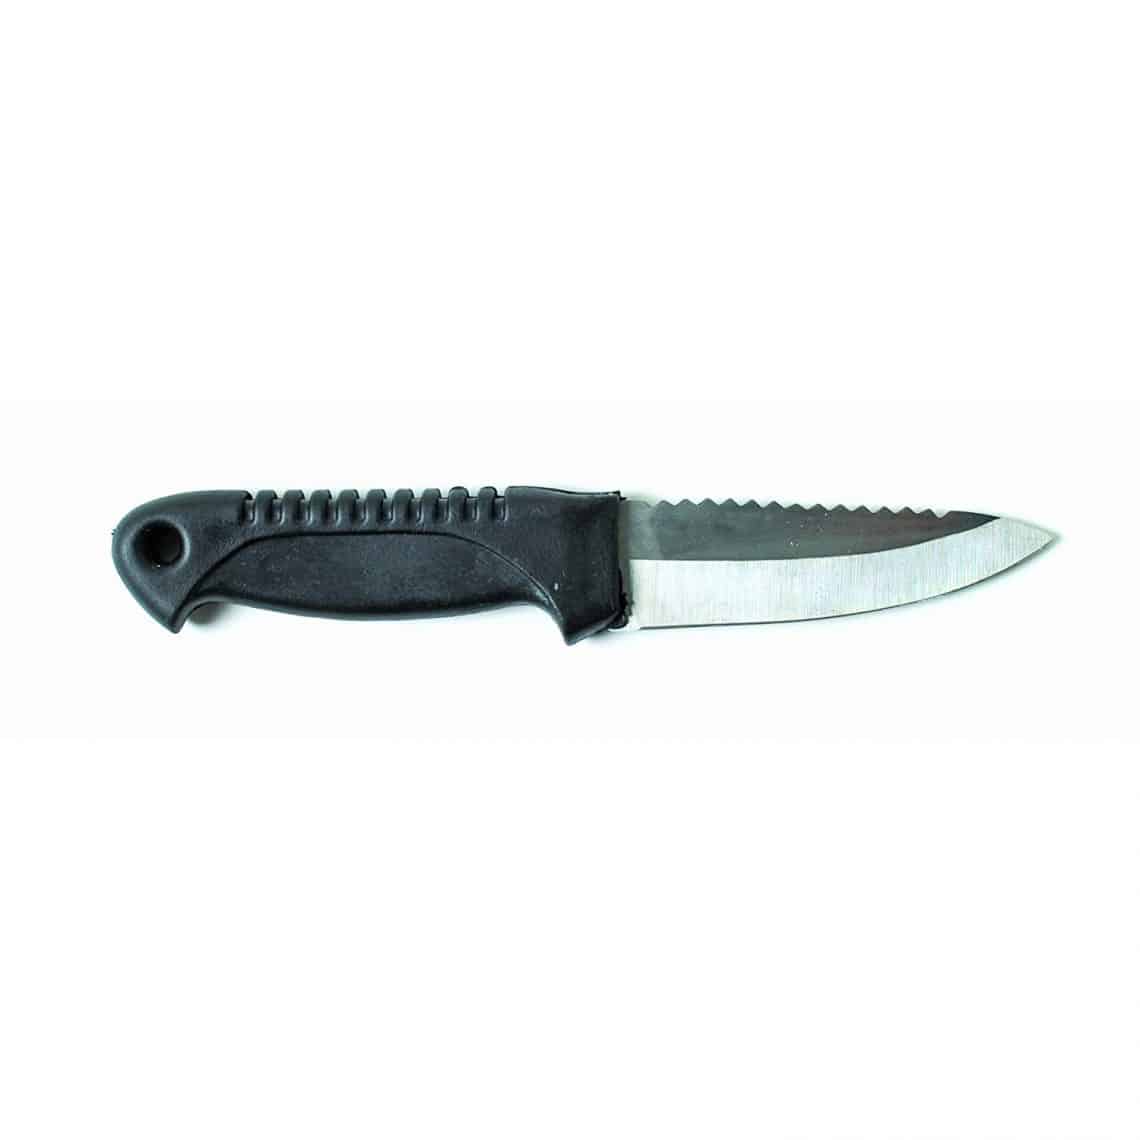  AccuSharp Knife Sharpener Multipack - Includes Knife